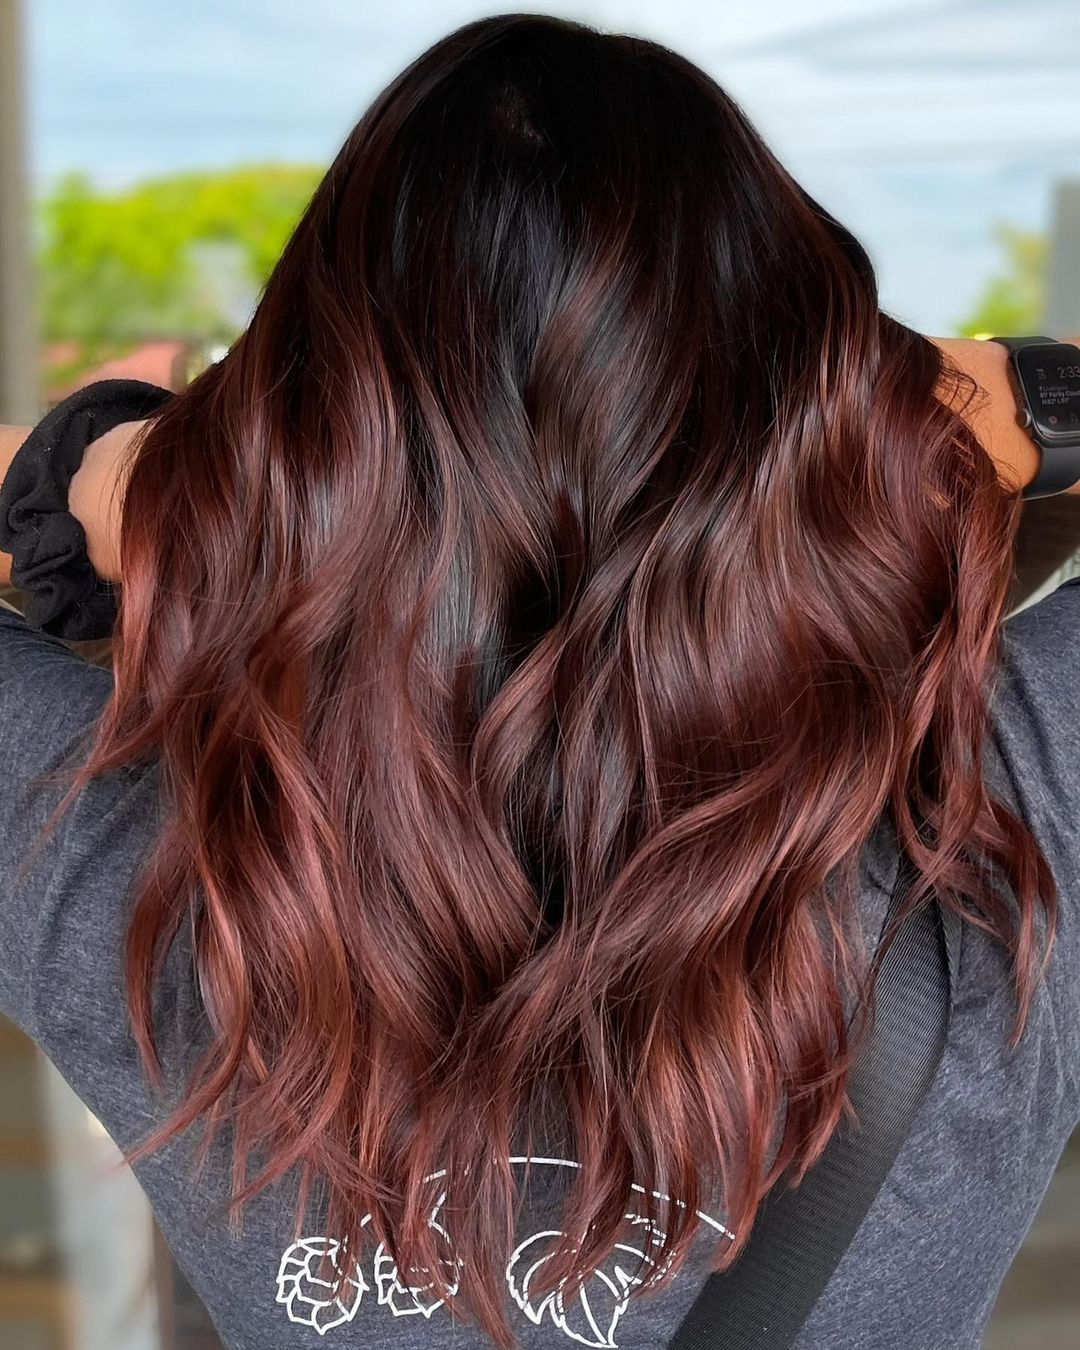 Red Hues on Long Chocolate Hair